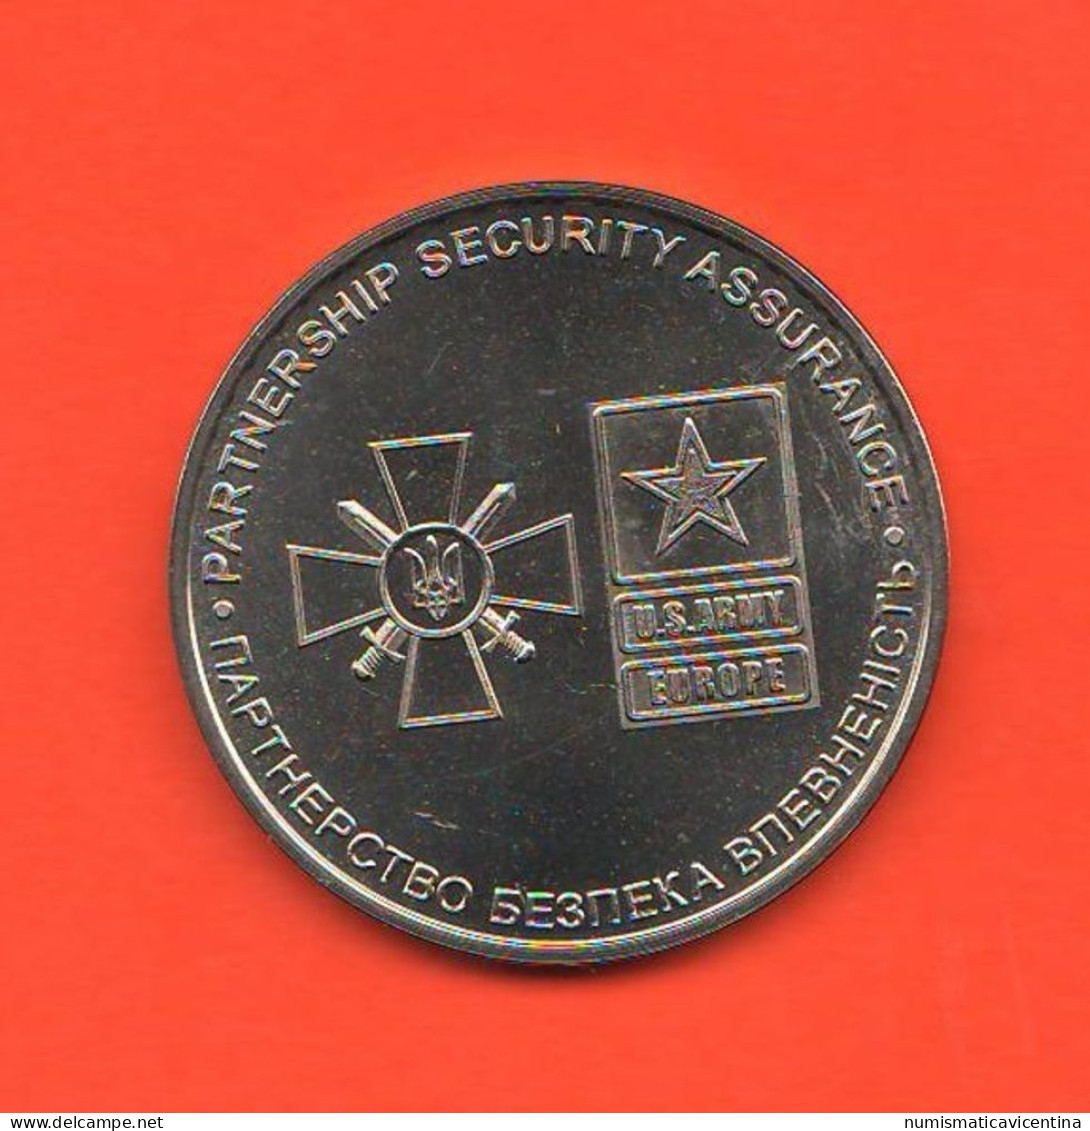 Saber Guardian Rapid Trident 2015 Ukraina Ucraine America Partnership Security Assurance Medal Medaille - Firmen